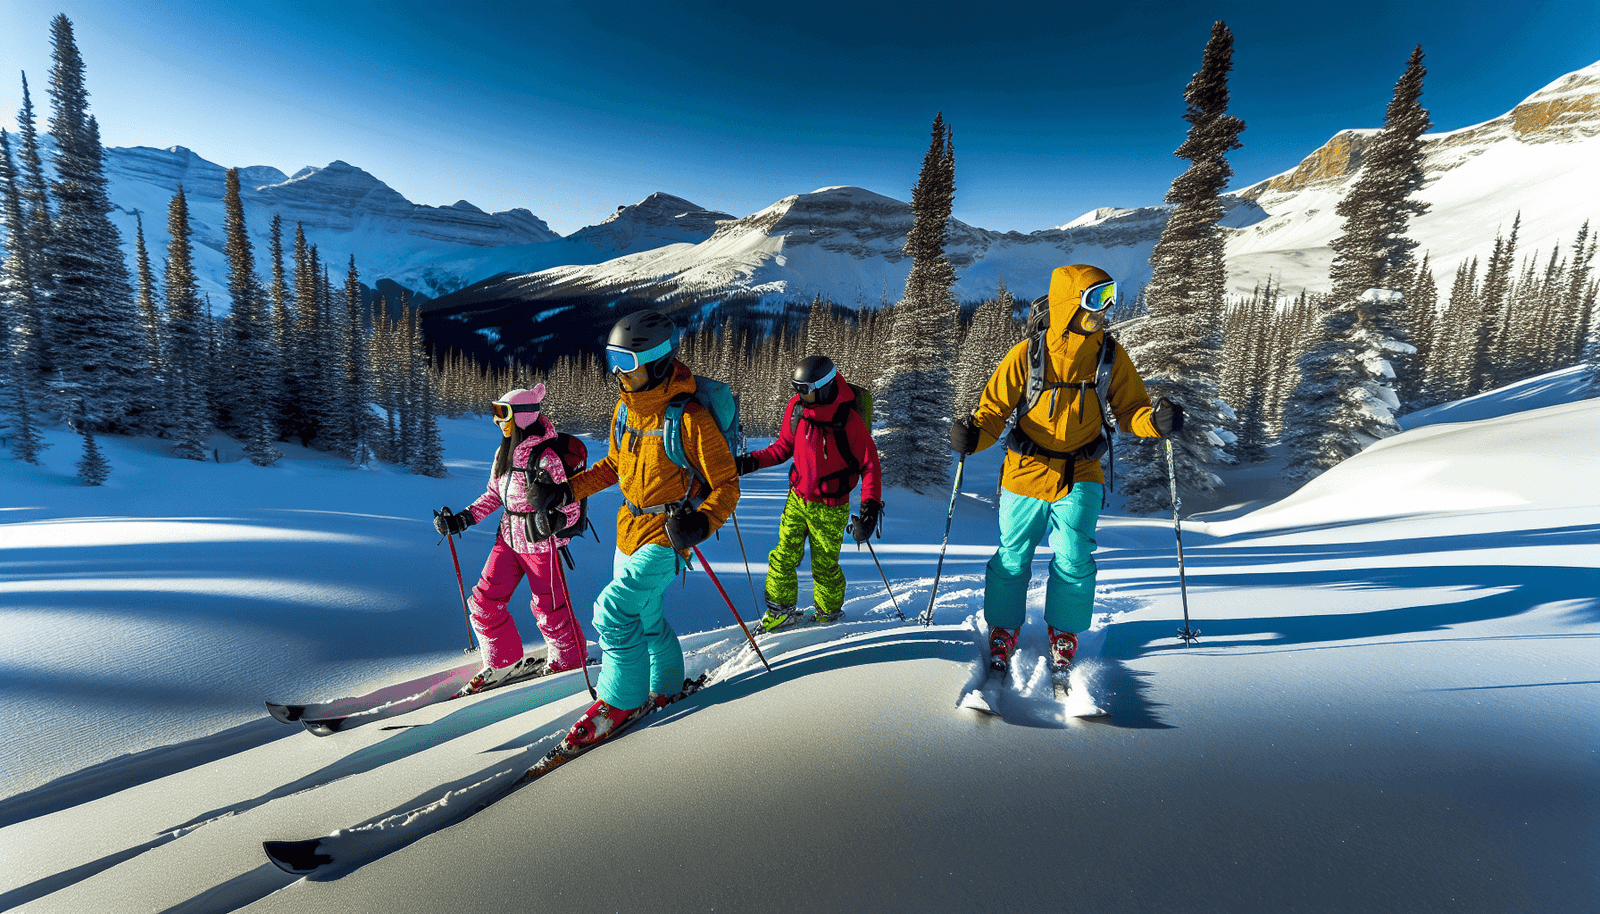 Ski tourers exploring the backcountry terrain